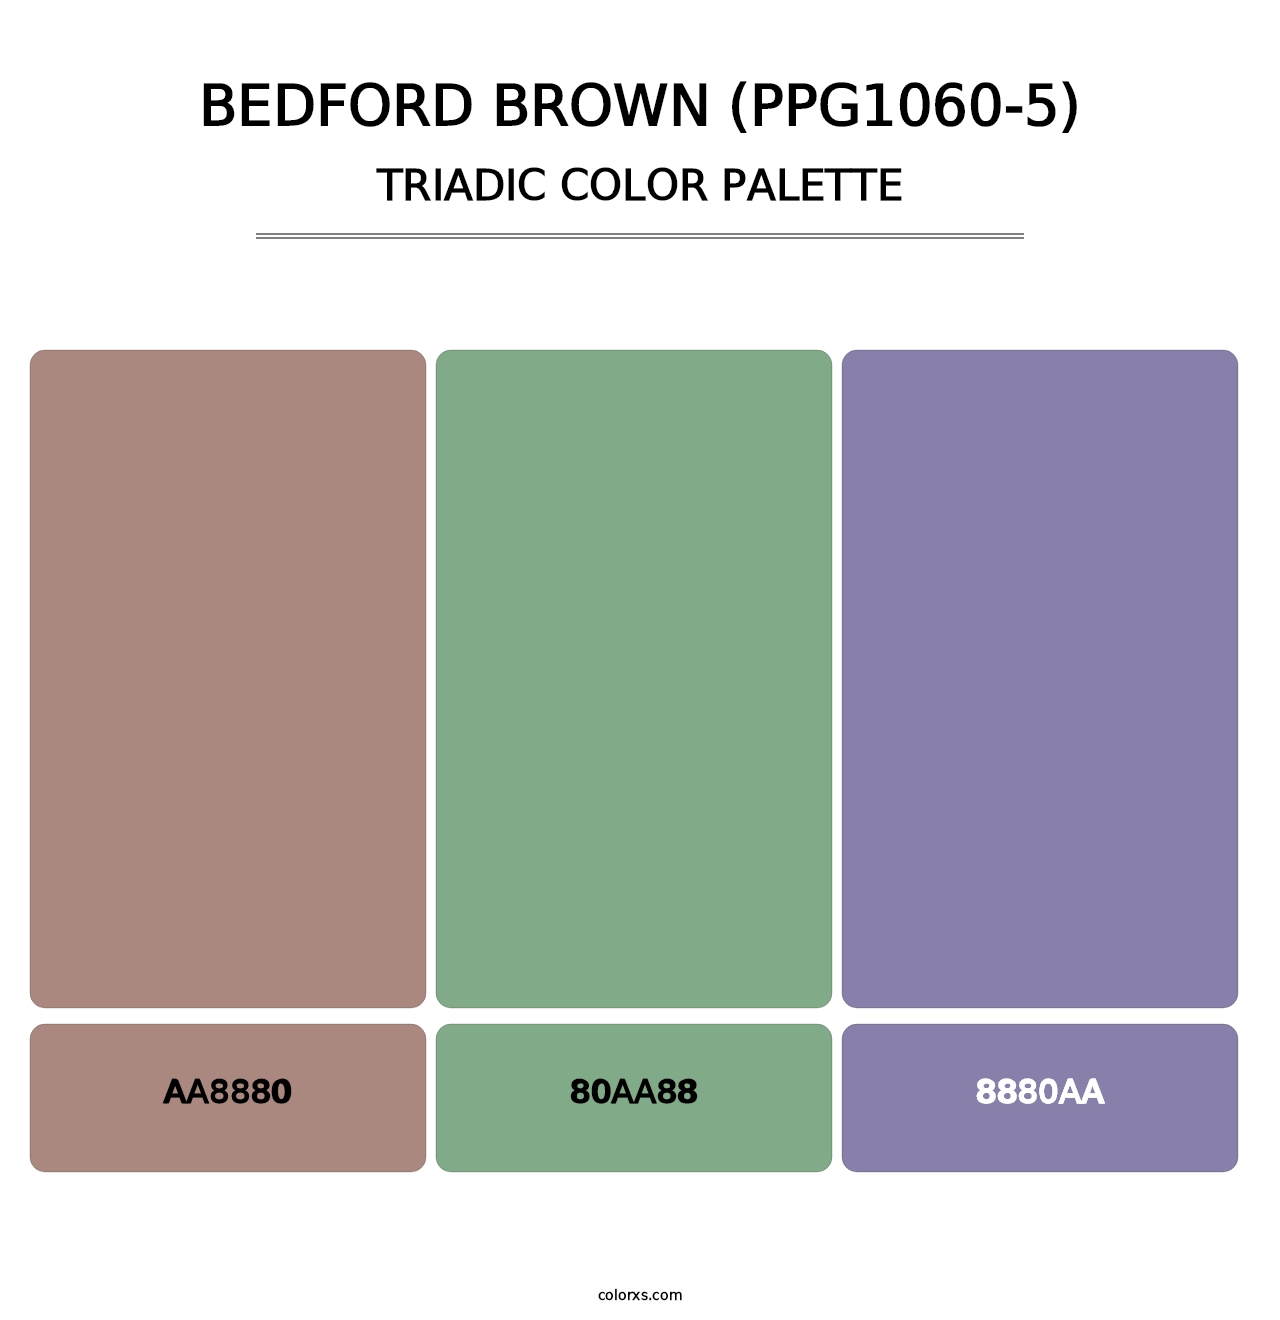 Bedford Brown (PPG1060-5) - Triadic Color Palette